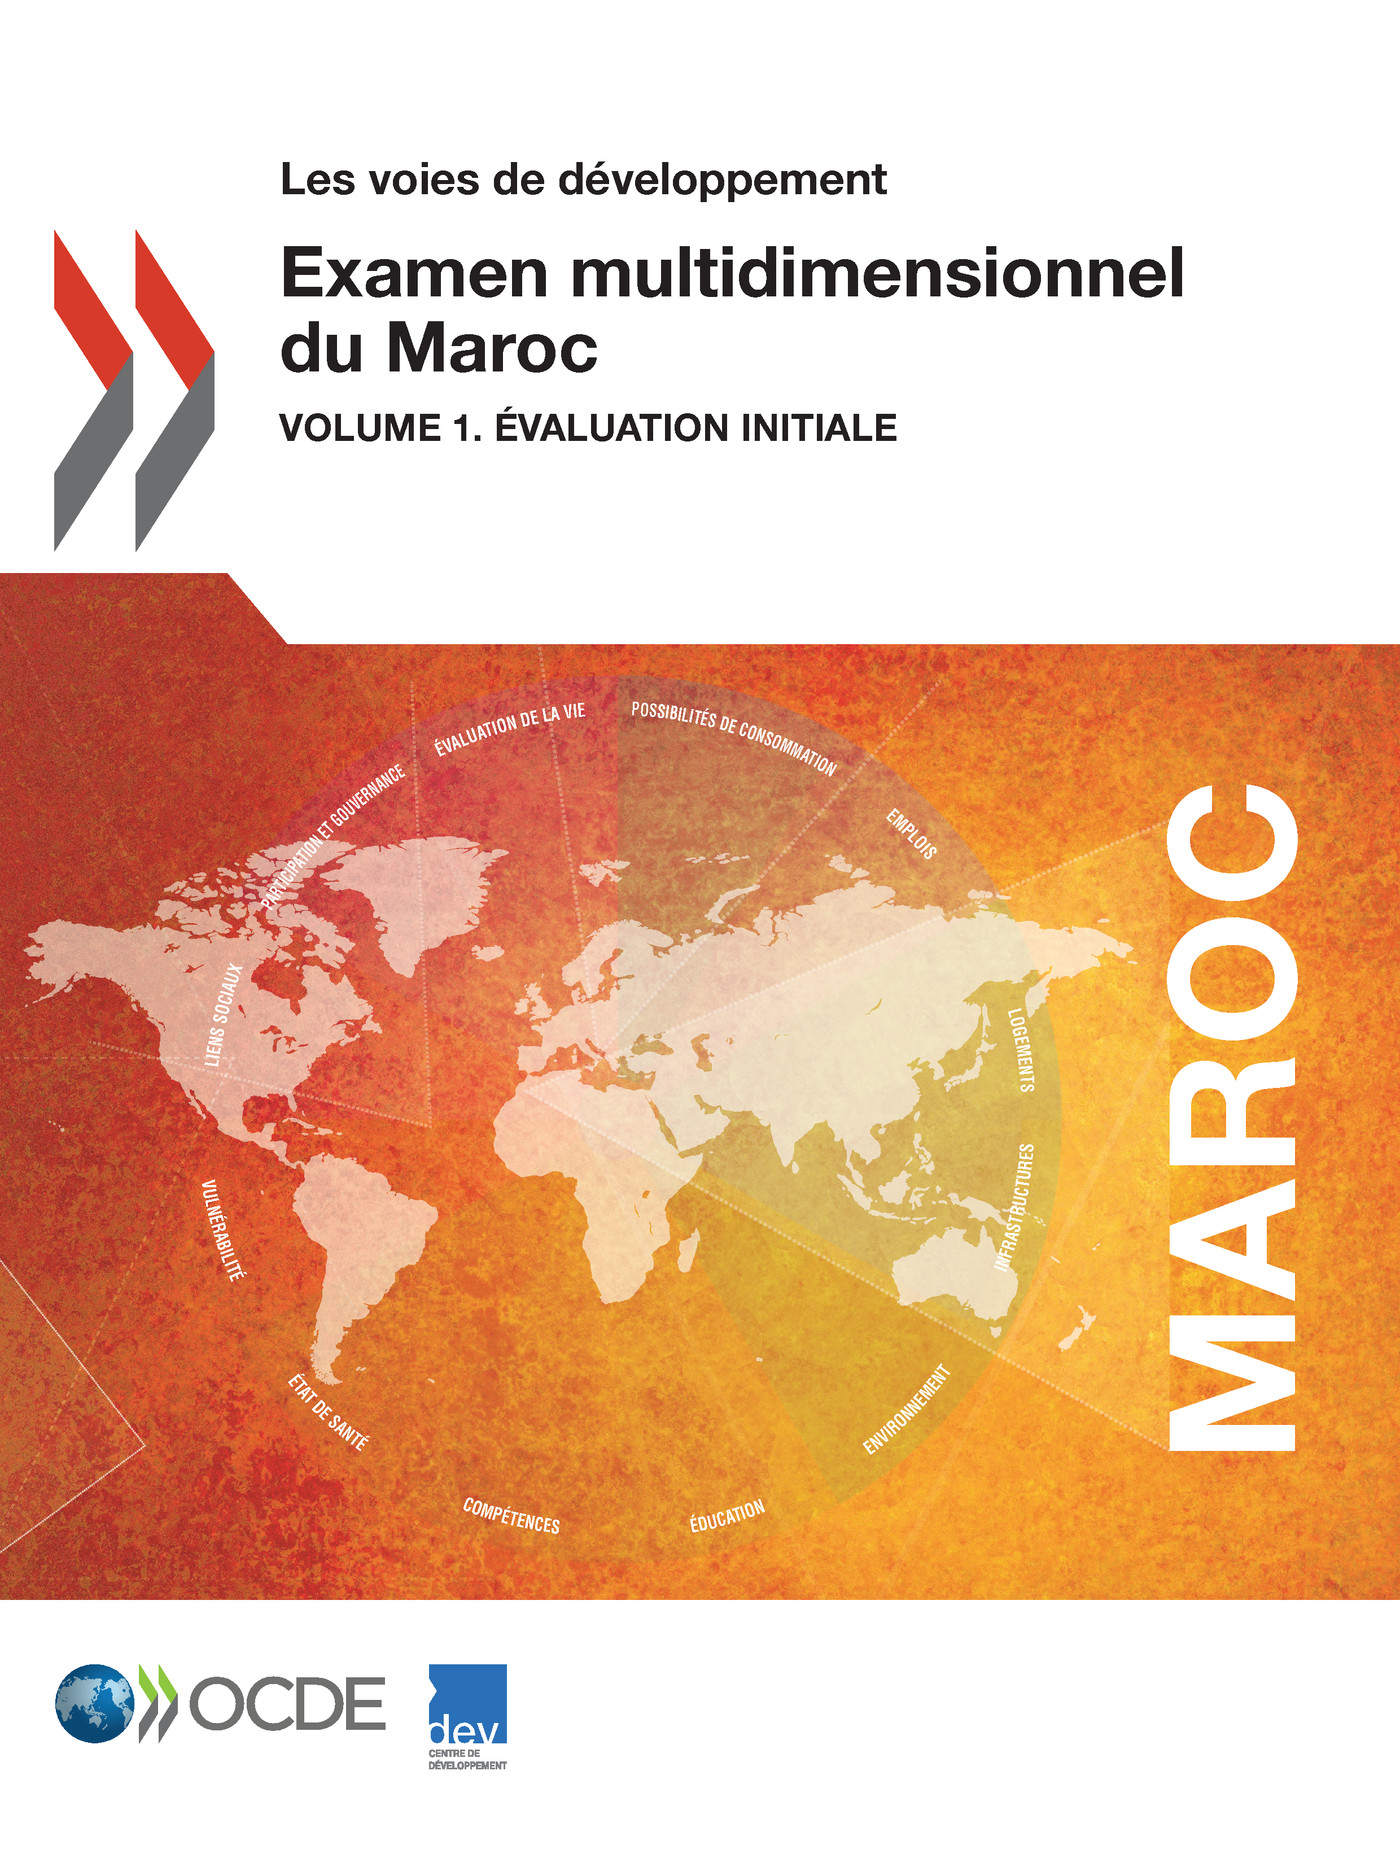 Examen multidimensionnel du Maroc -  Collectif - OCDE / OECD